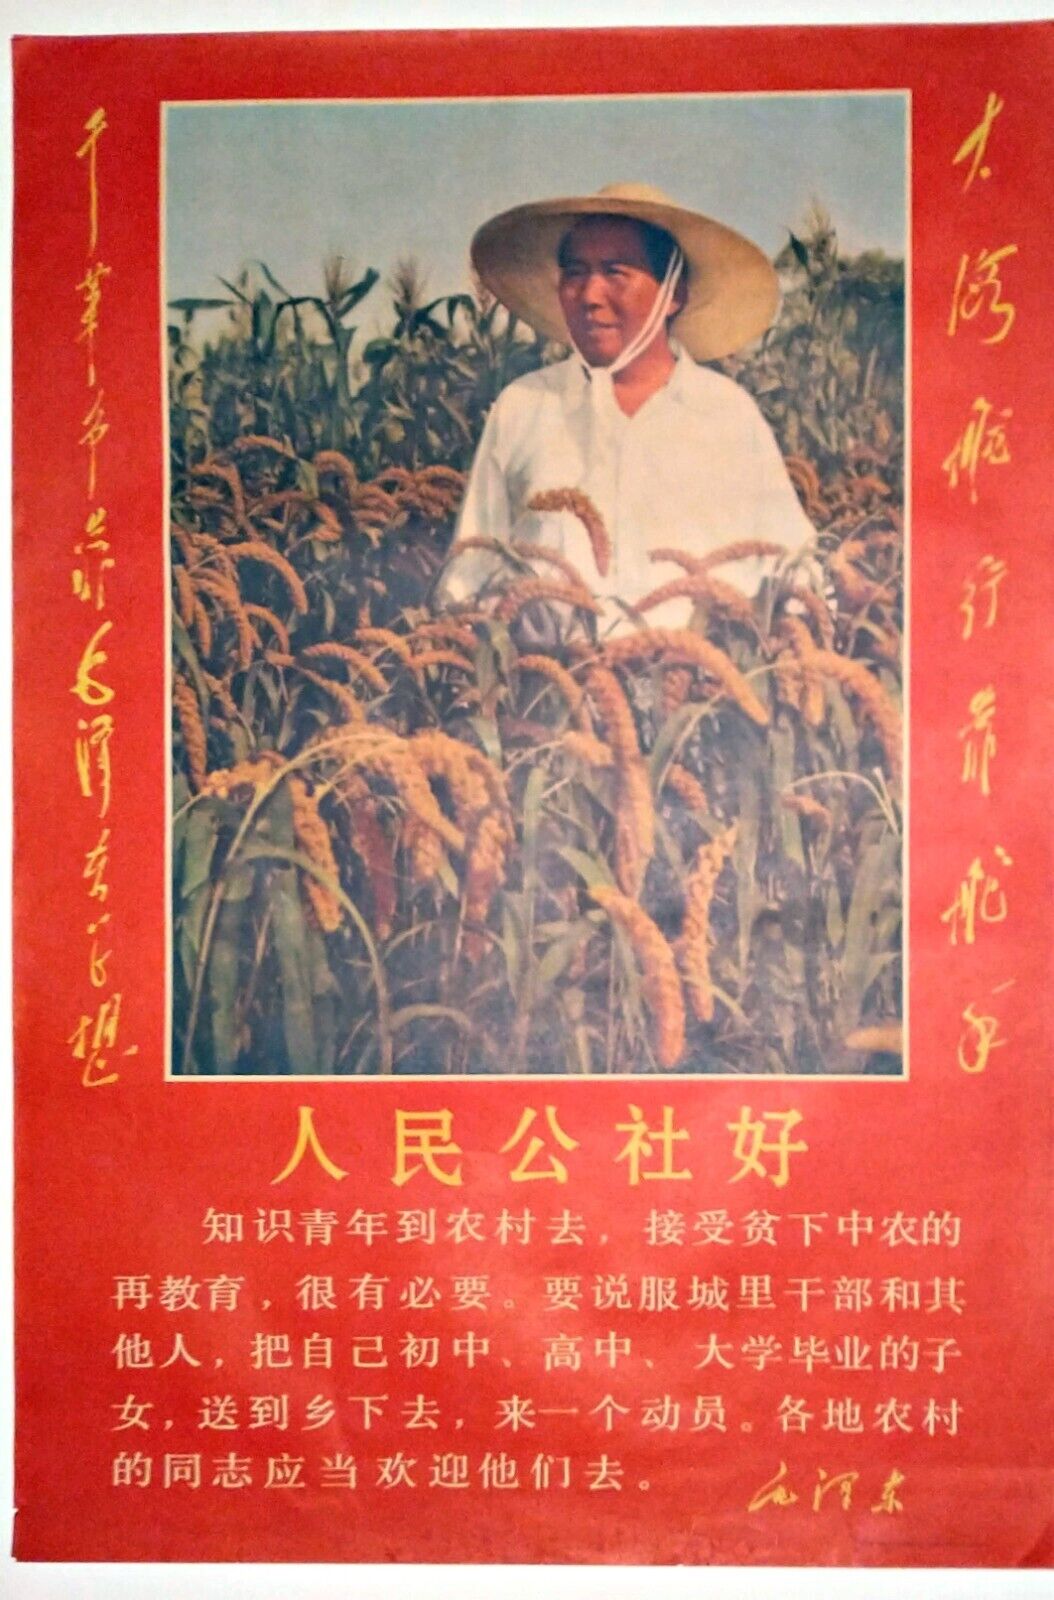 CHINESE CULTURAL REVOLUTION POSTER 60's VINTAGE - US SELLER - Mao & Communes